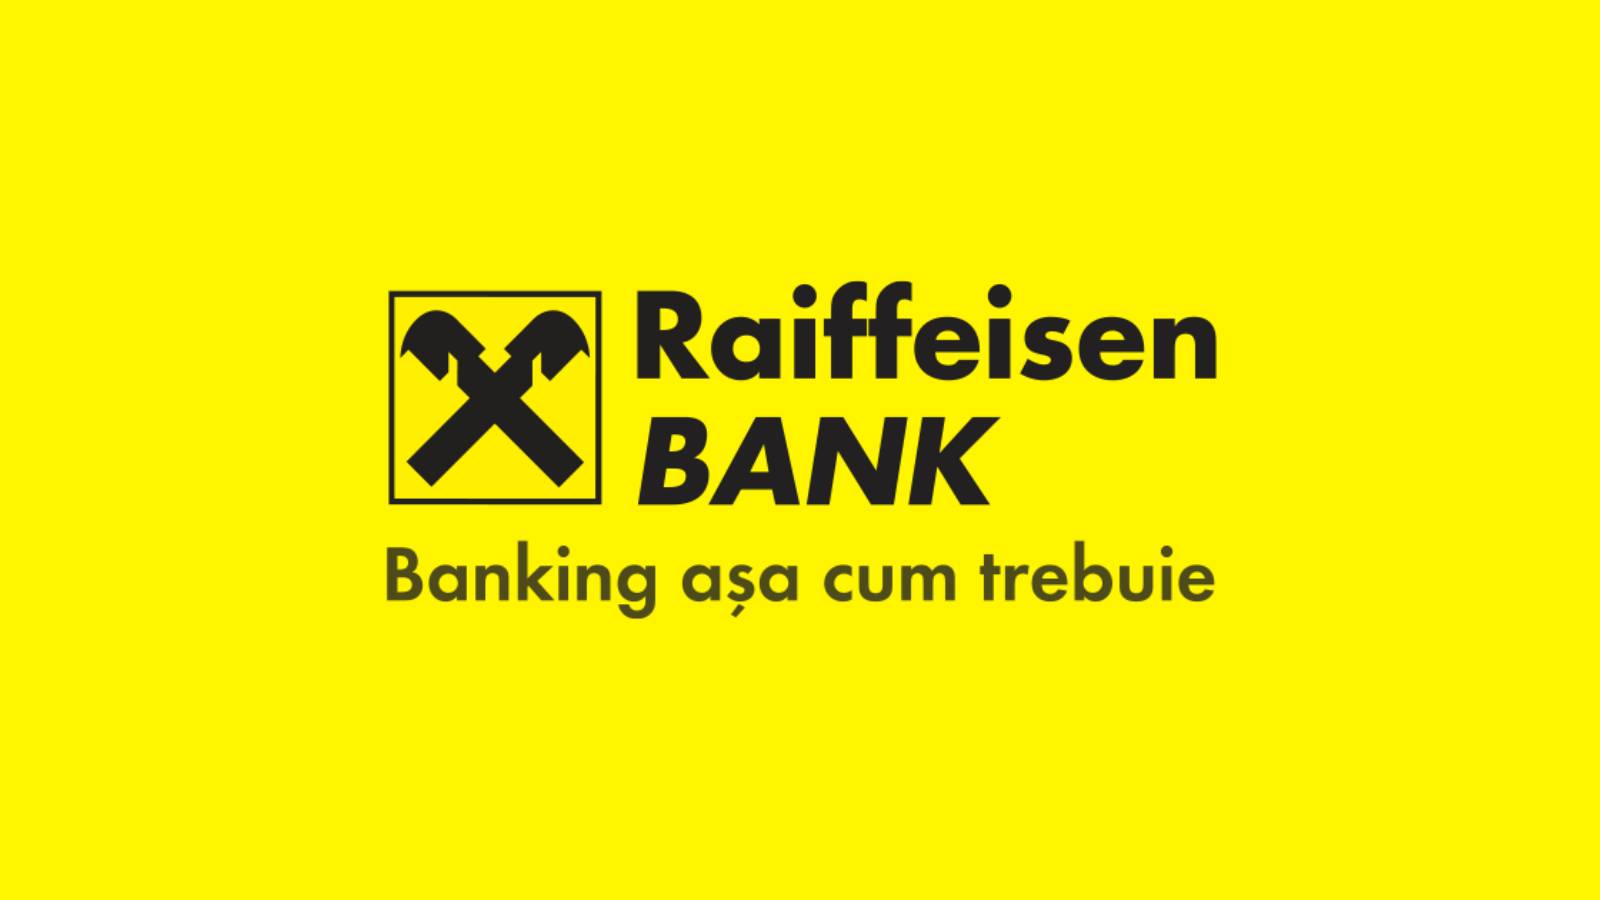 Plage de la Banque Raiffeisen